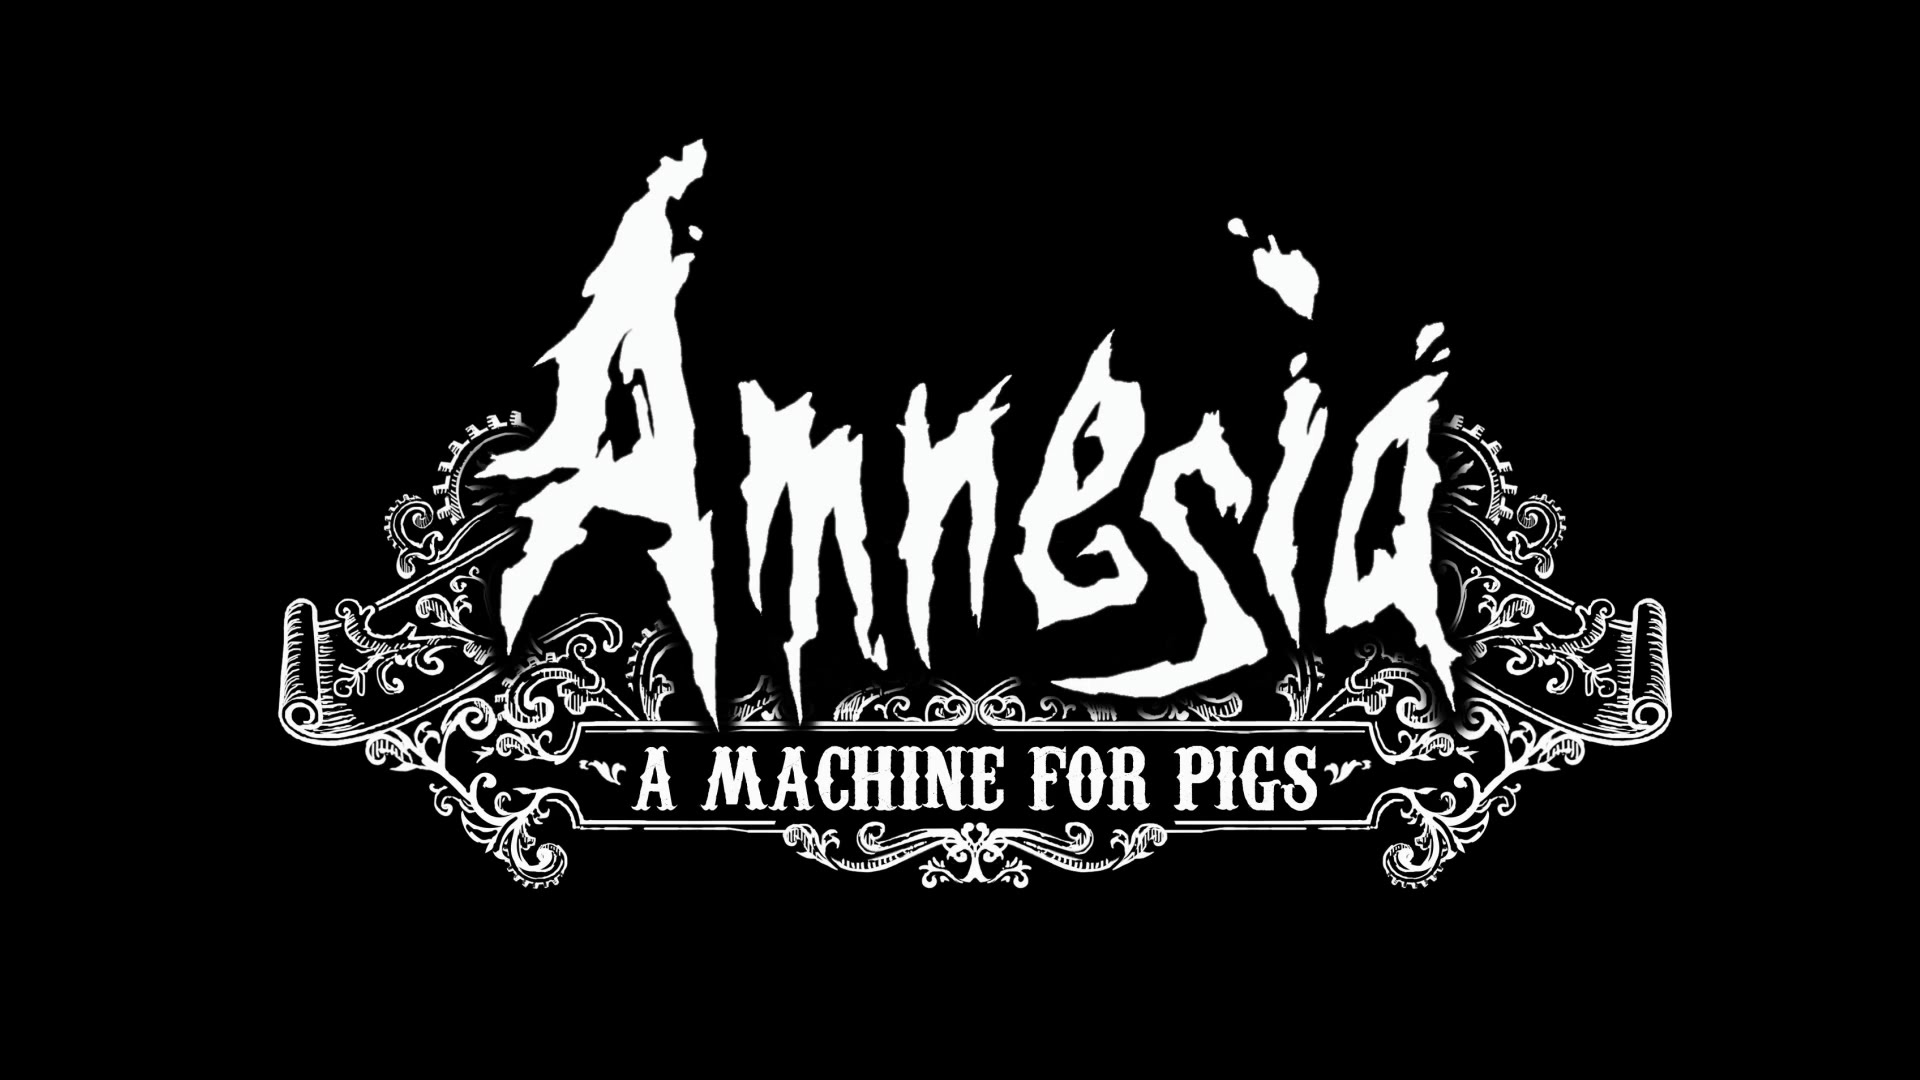 Traicionats. Amnesia: A machine for pigs #13 de Xavalma